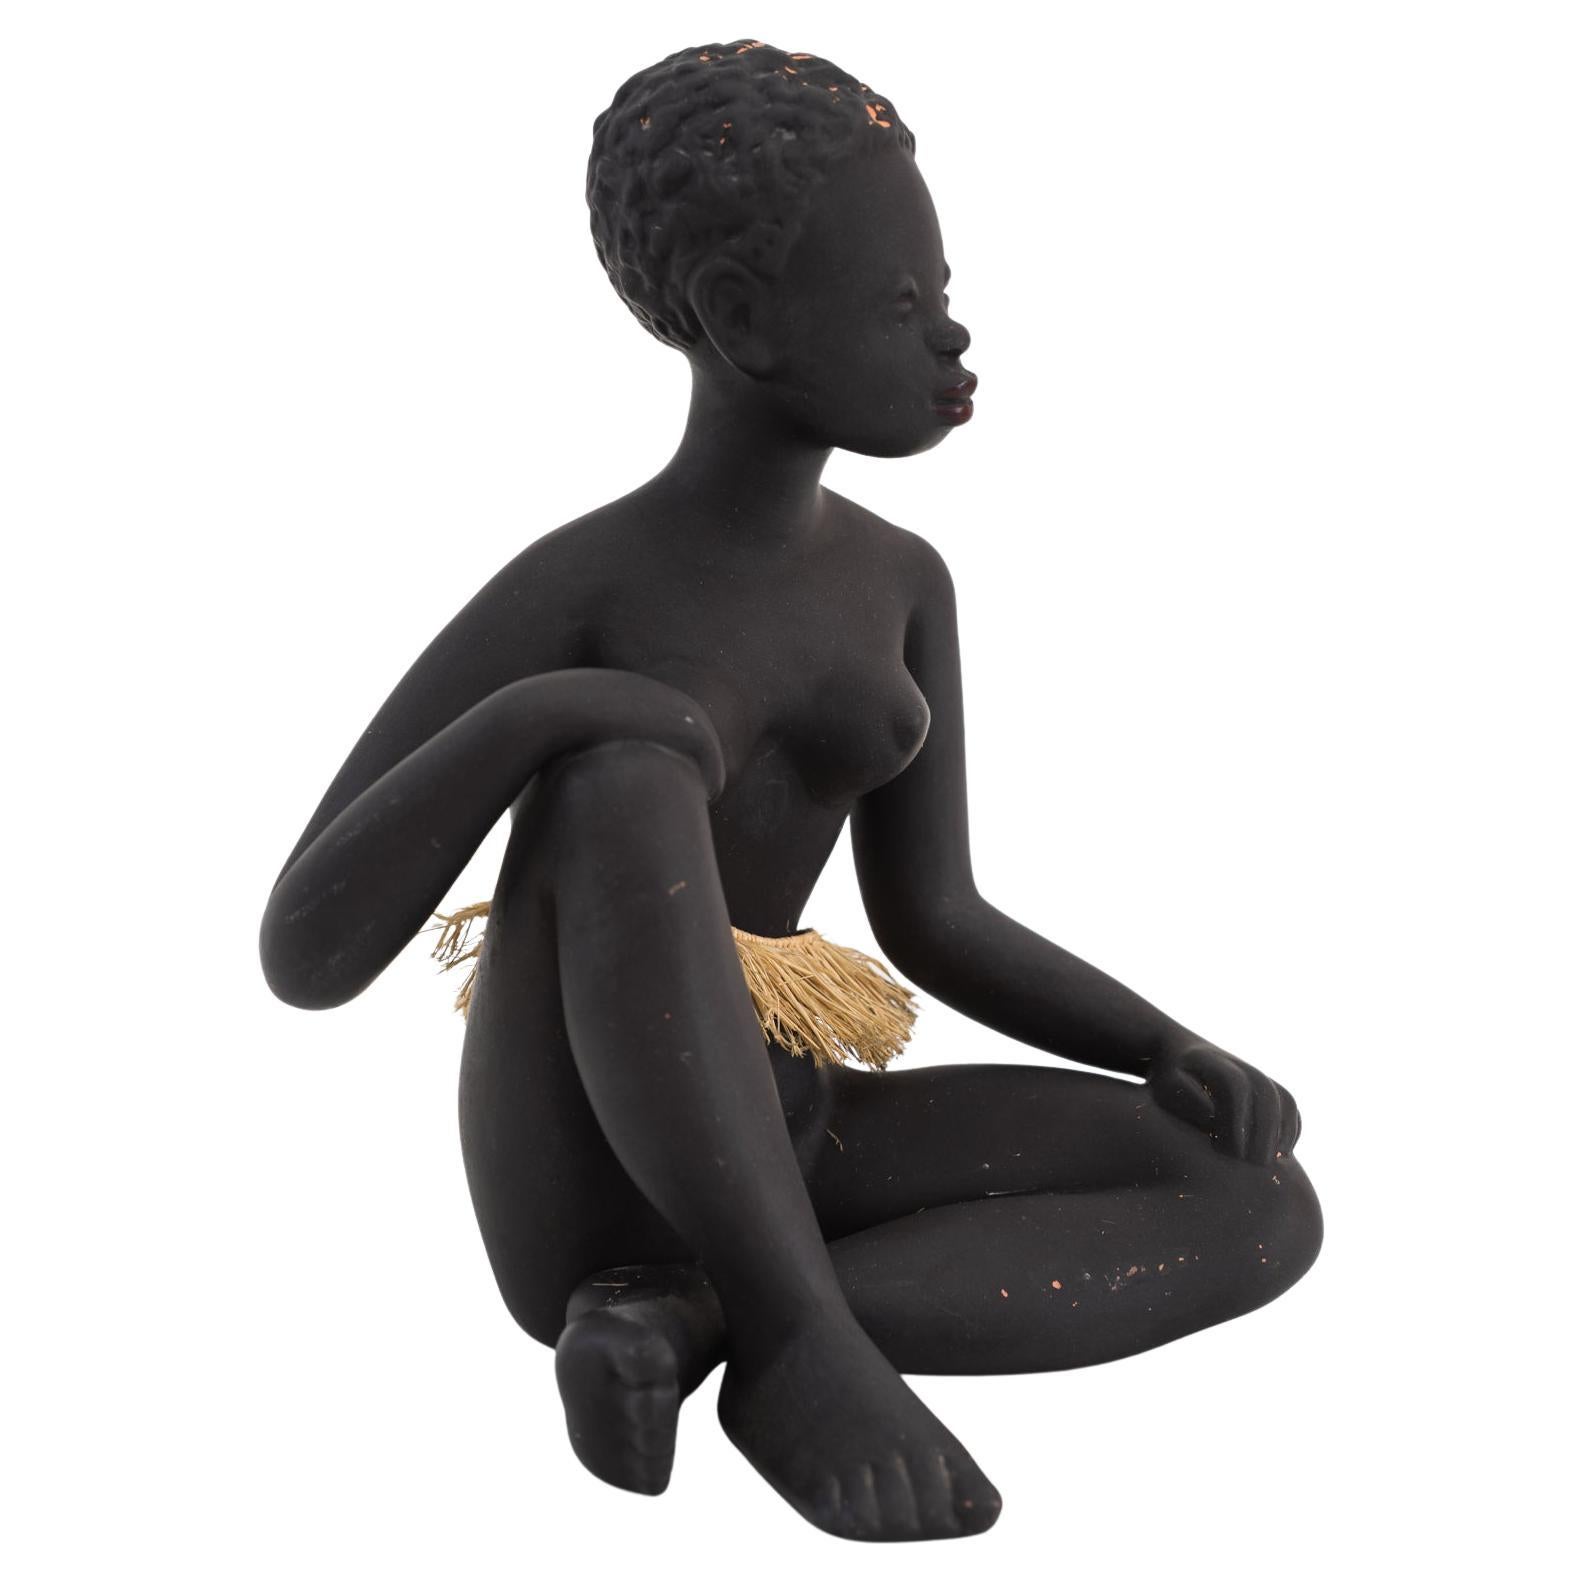 Exotic African Women Sculpture by Leopold Anzengruber, Vienna 1950s